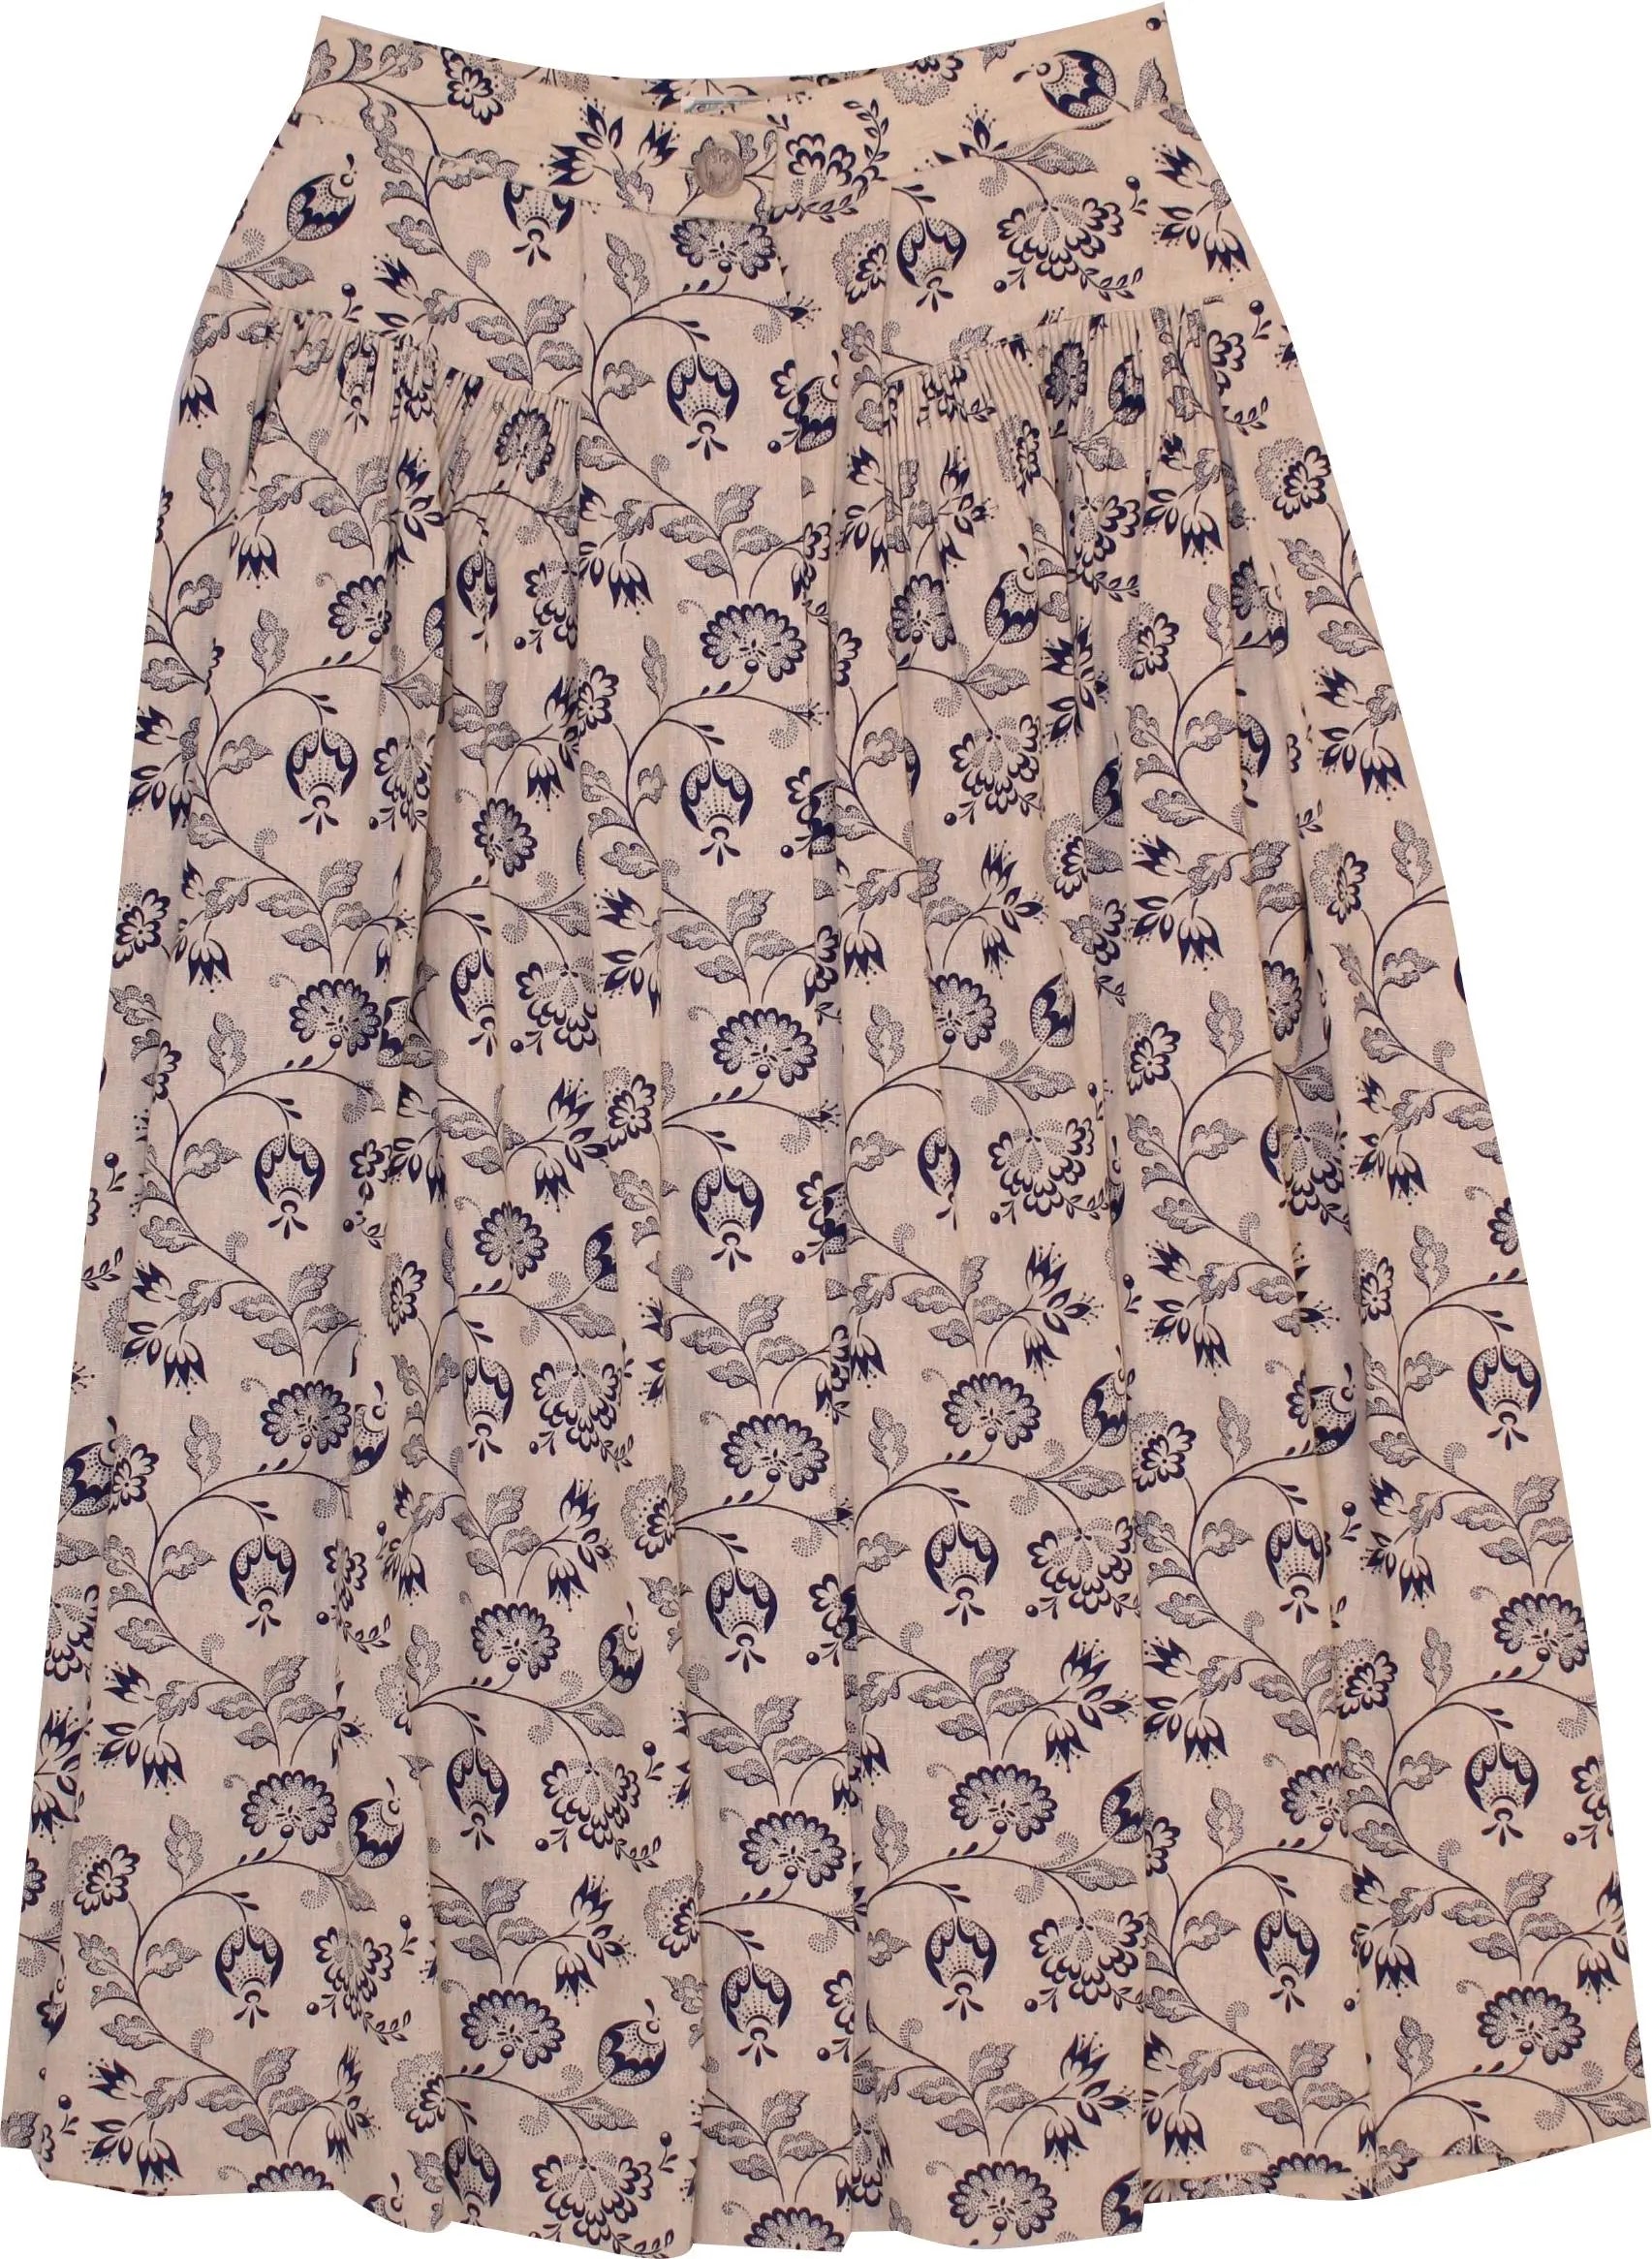 Gössi - Folklore Skirt- ThriftTale.com - Vintage and second handclothing